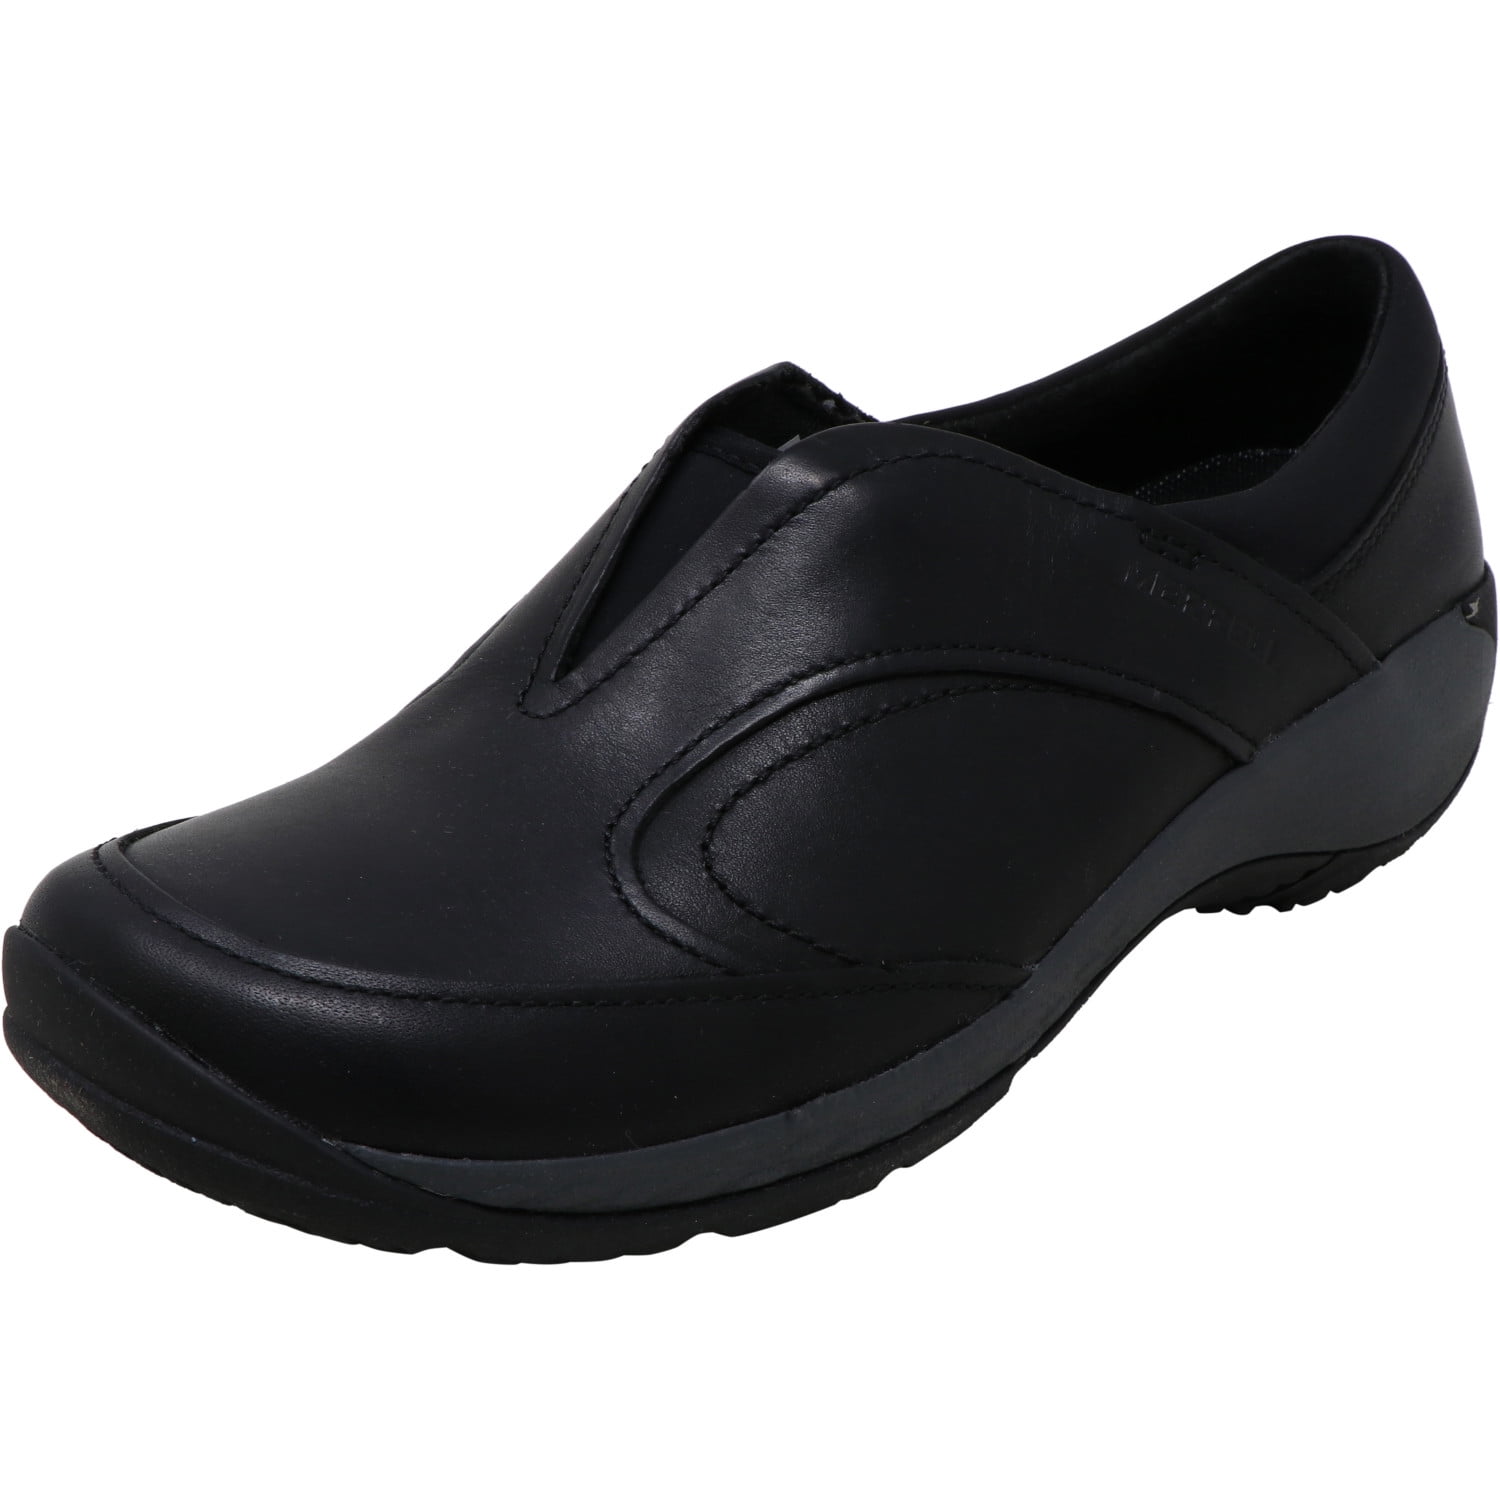 Merrell Men's Encore Q2 Moc Leather Black Ankle-High Slip-On Shoes - 6M ...